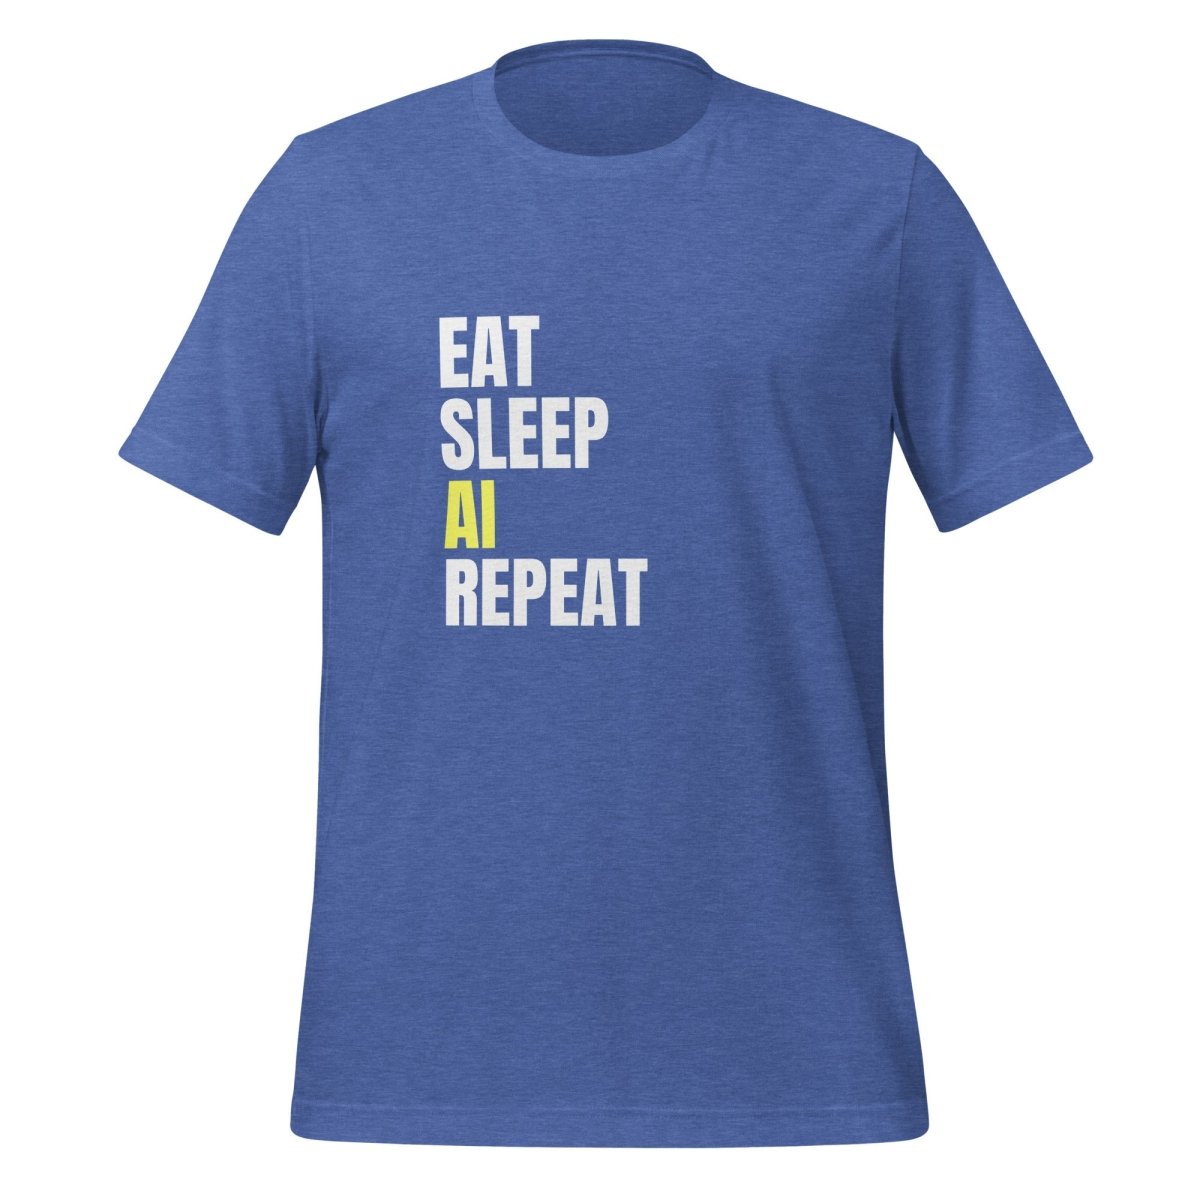 EAT SLEEP AI REPEAT T - Shirt 3 (unisex) - Heather True Royal - AI Store